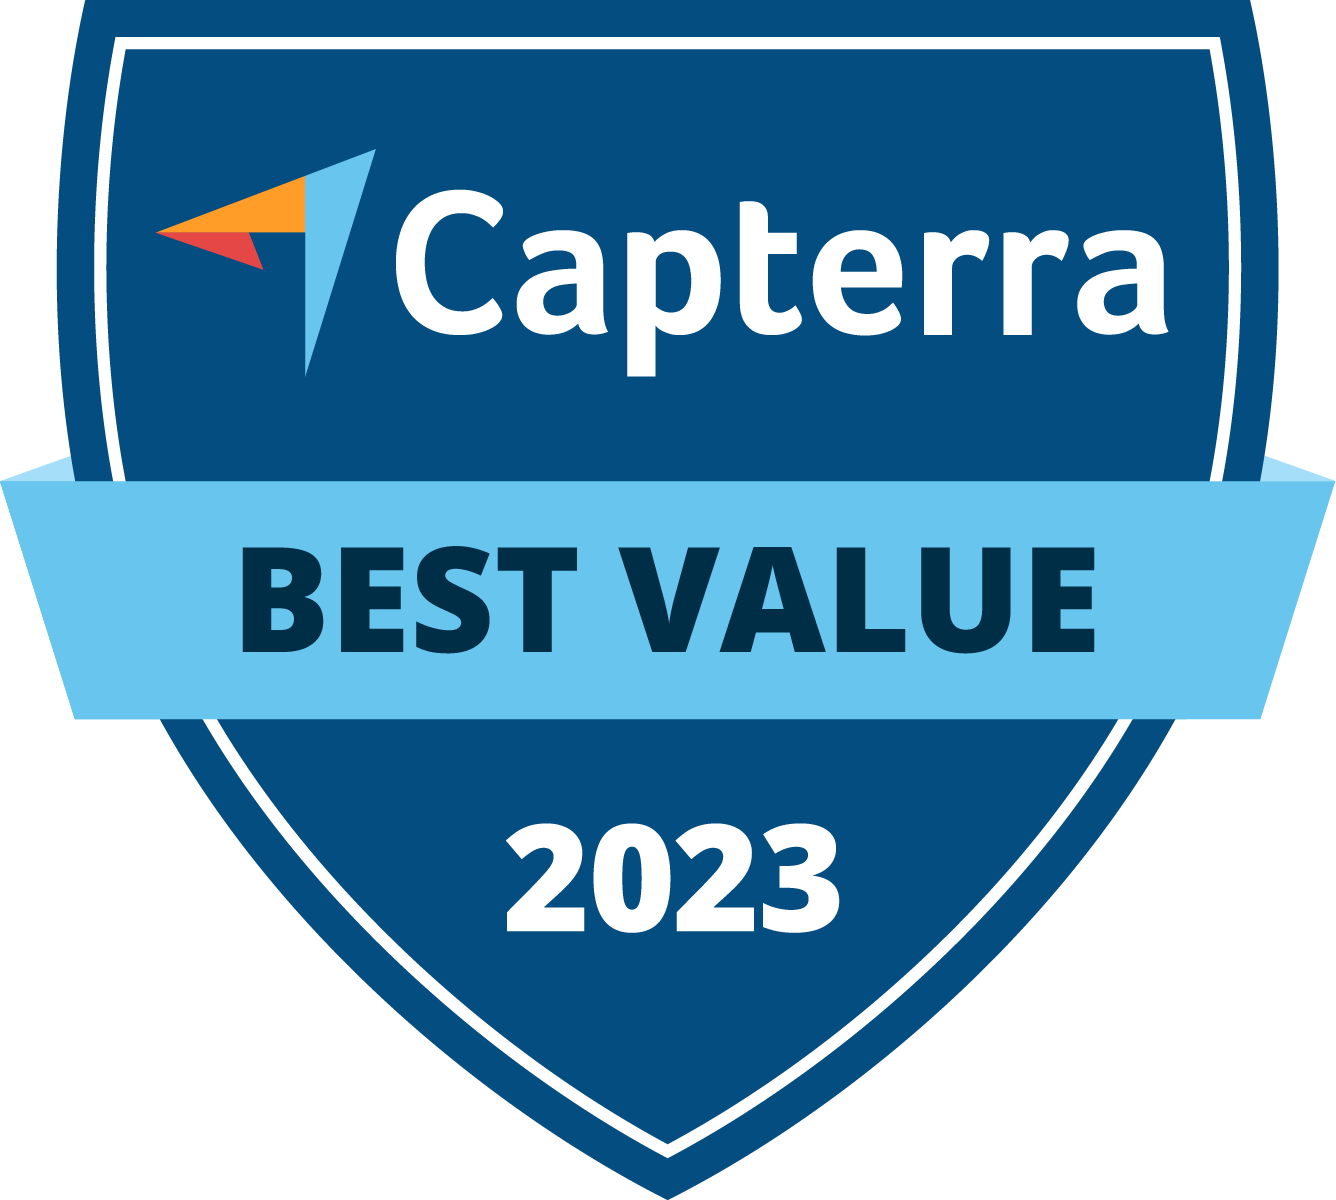 Capterra - Best Value 2023